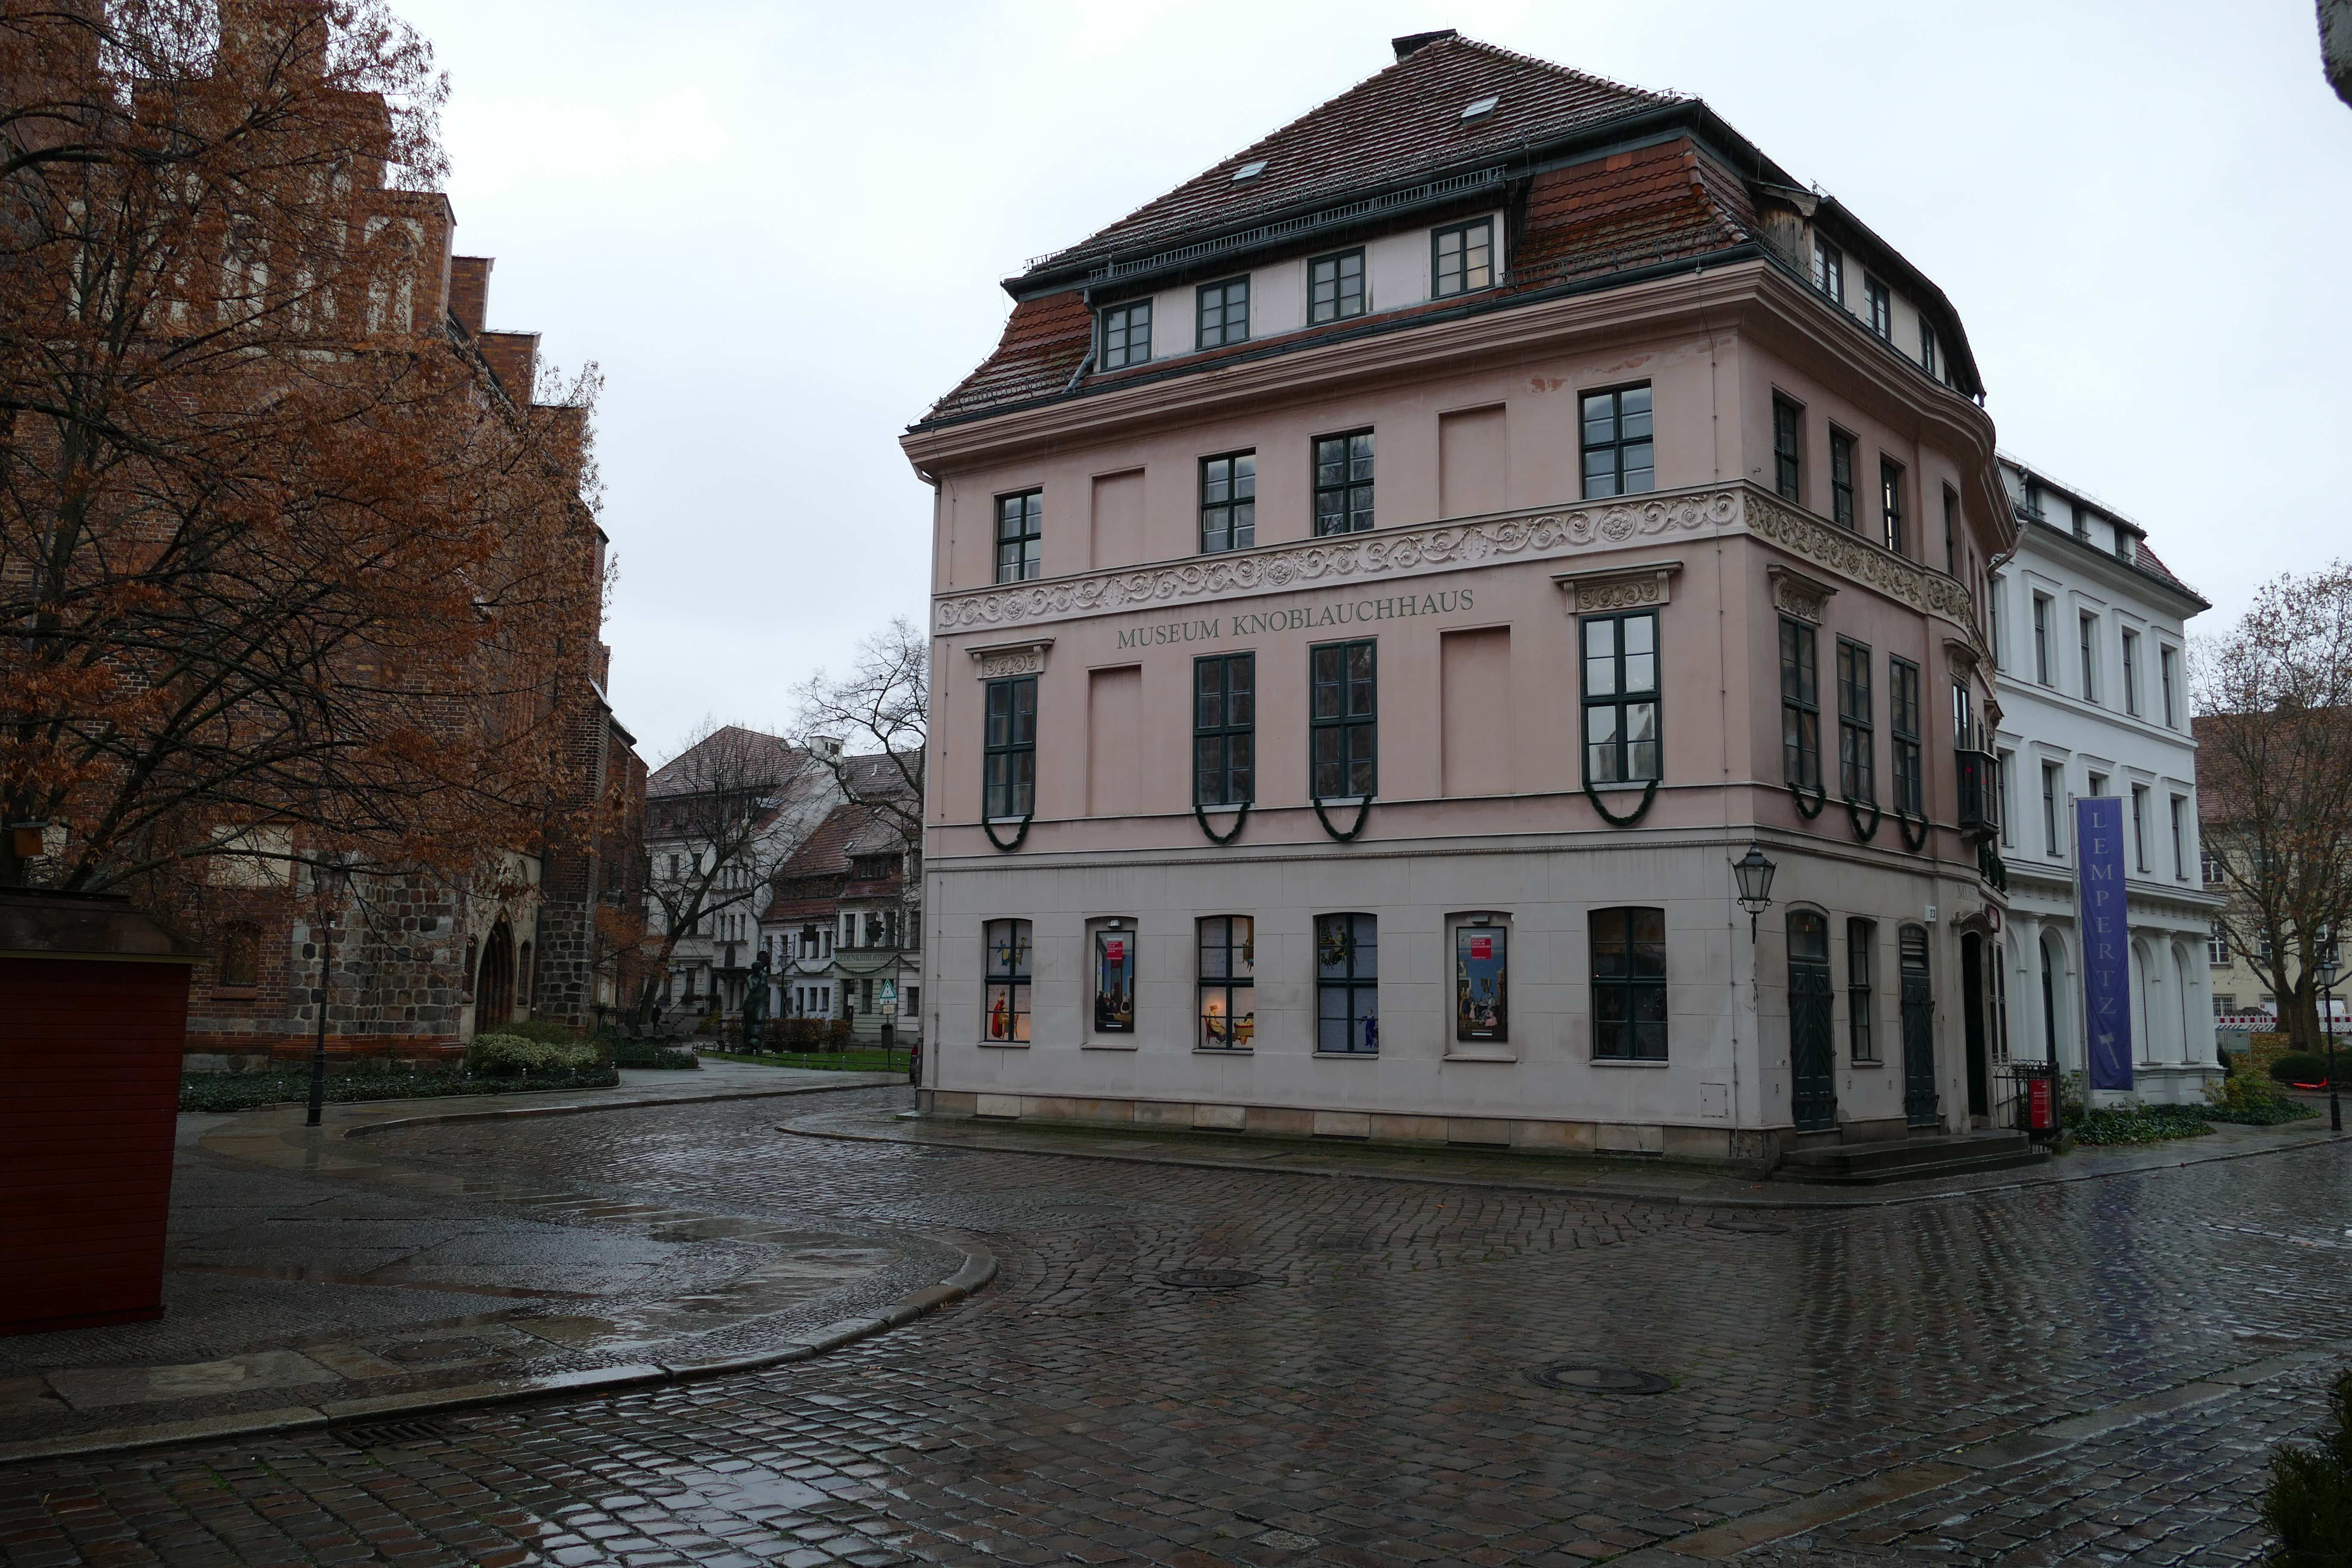 Knoblauchhaus